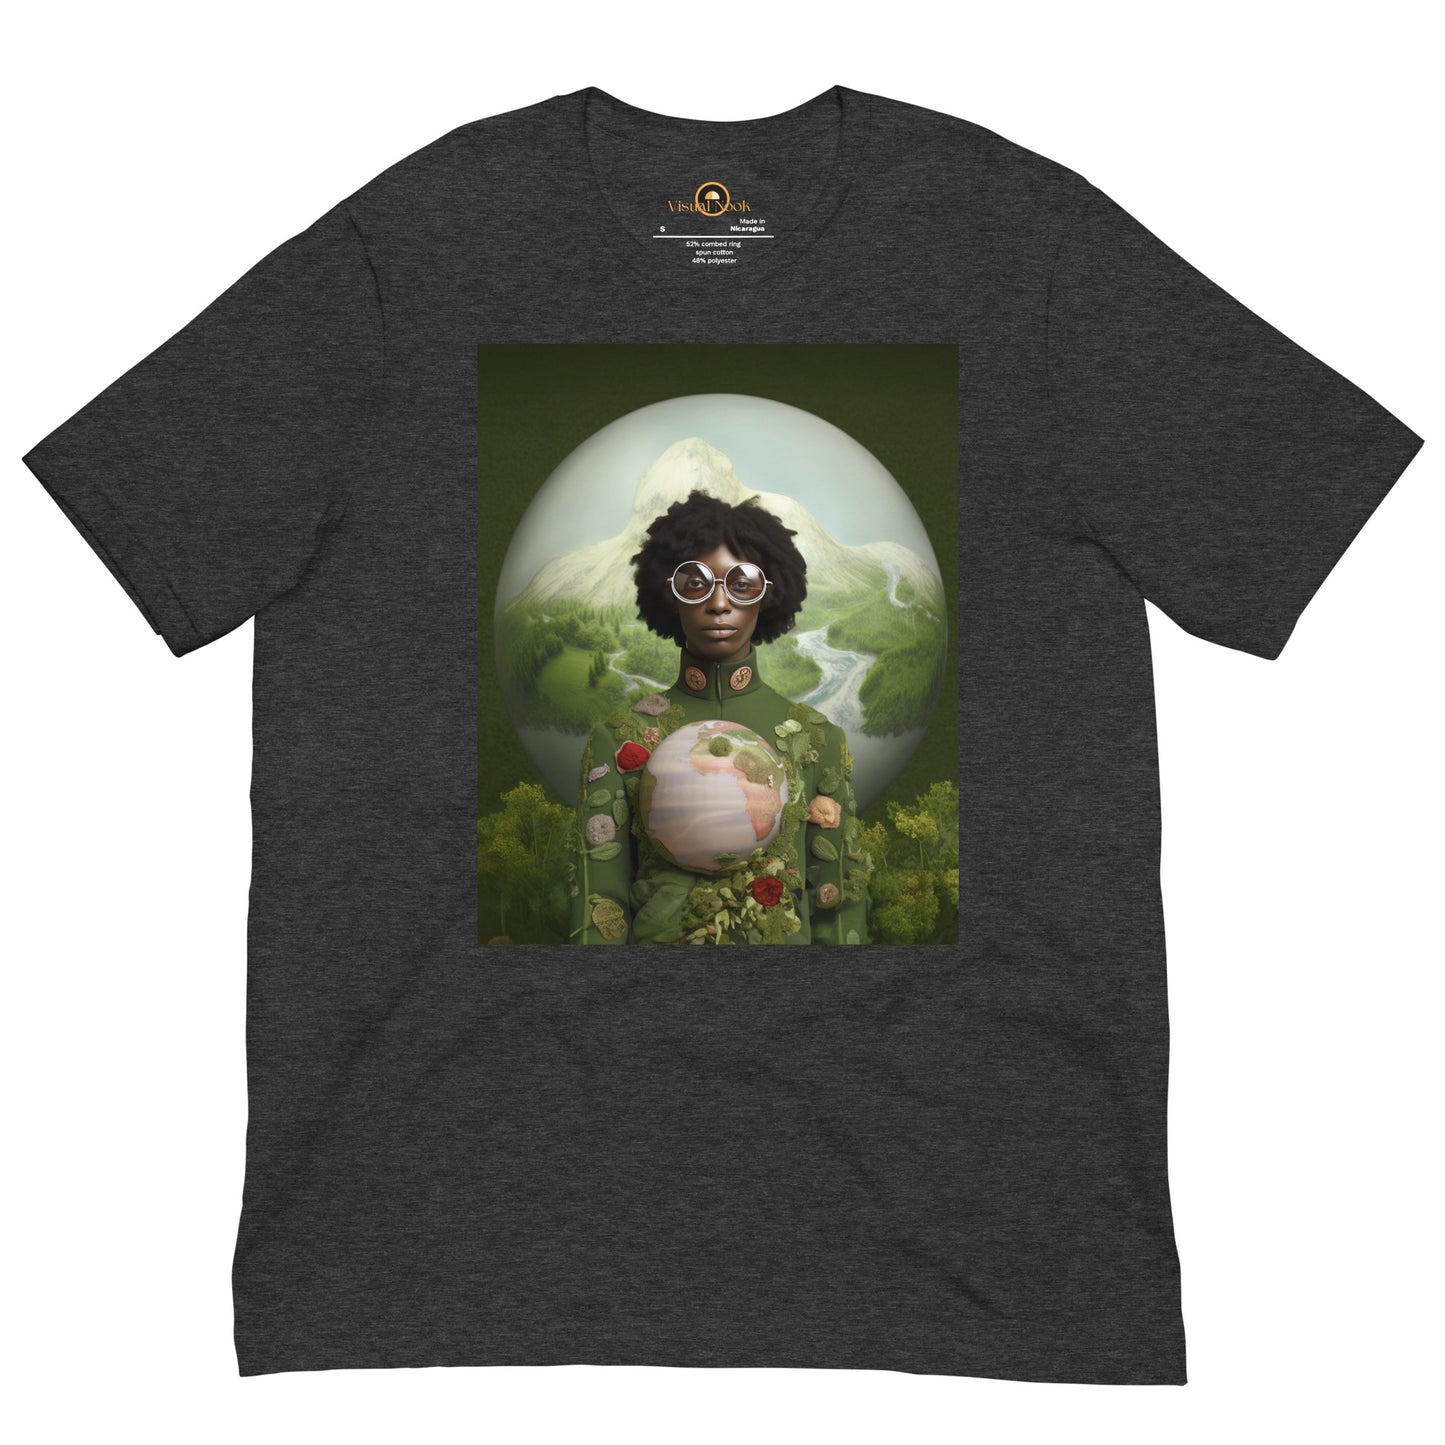 Men's T-shirt, Organic Cotton T-shirt, CustomMade, Eco-Friendly Tee, Men's T-shirts, mens-t-shirt-180